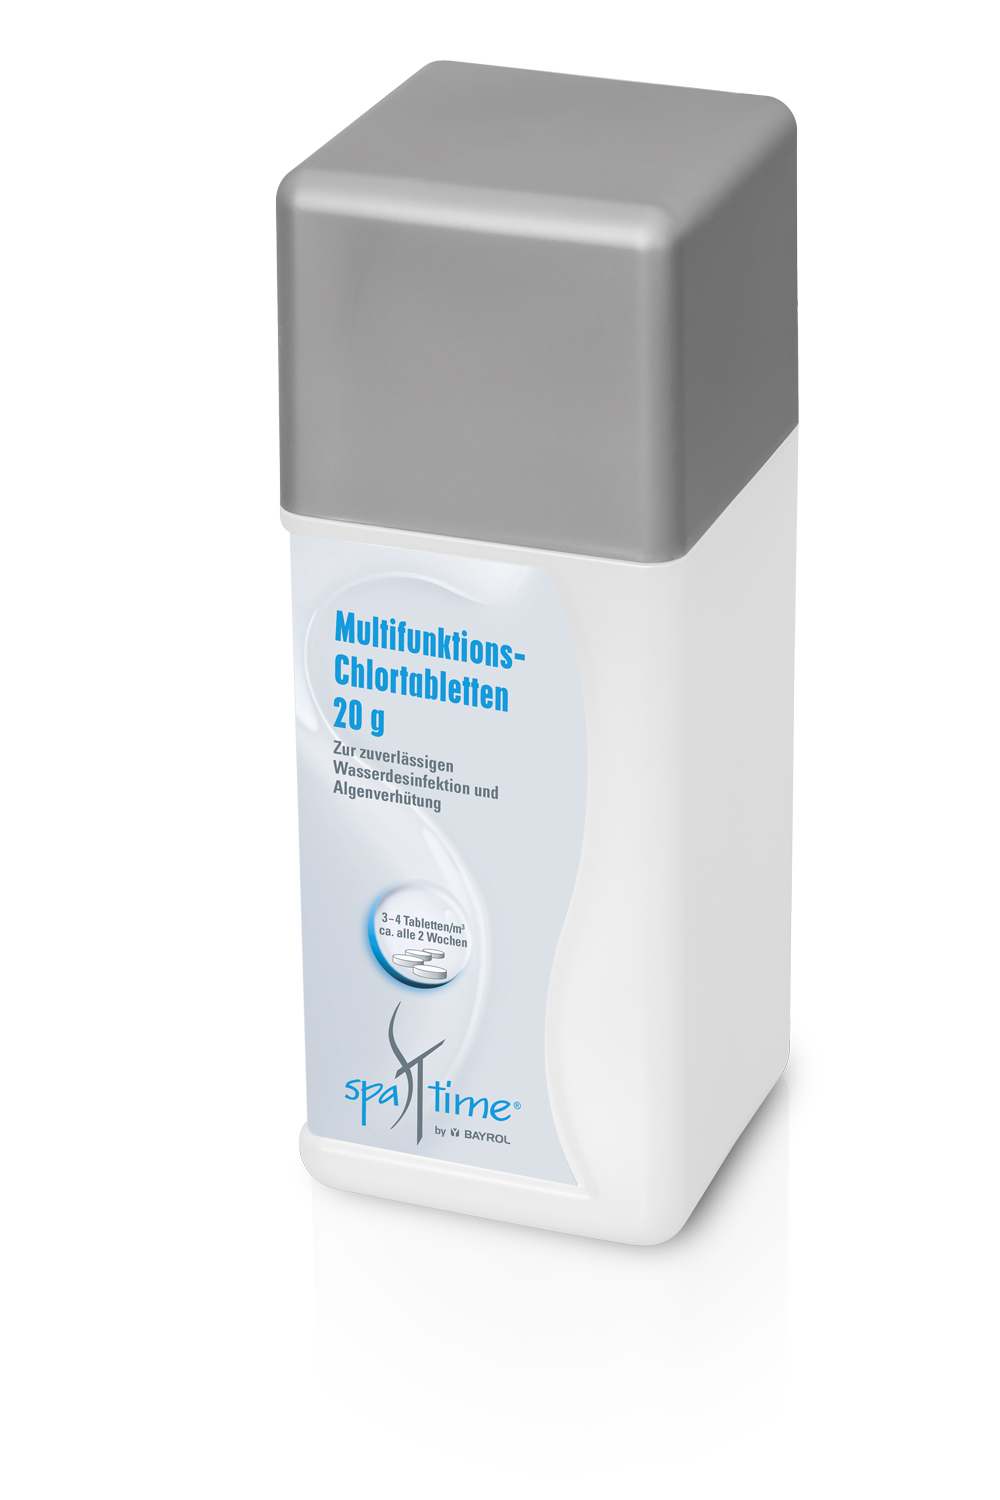 AS-021218 SpaTime Multifunktions-Chlortabletten 20g 1kg Multifunktions-Chlortabletten 20 g, langsamlöslich